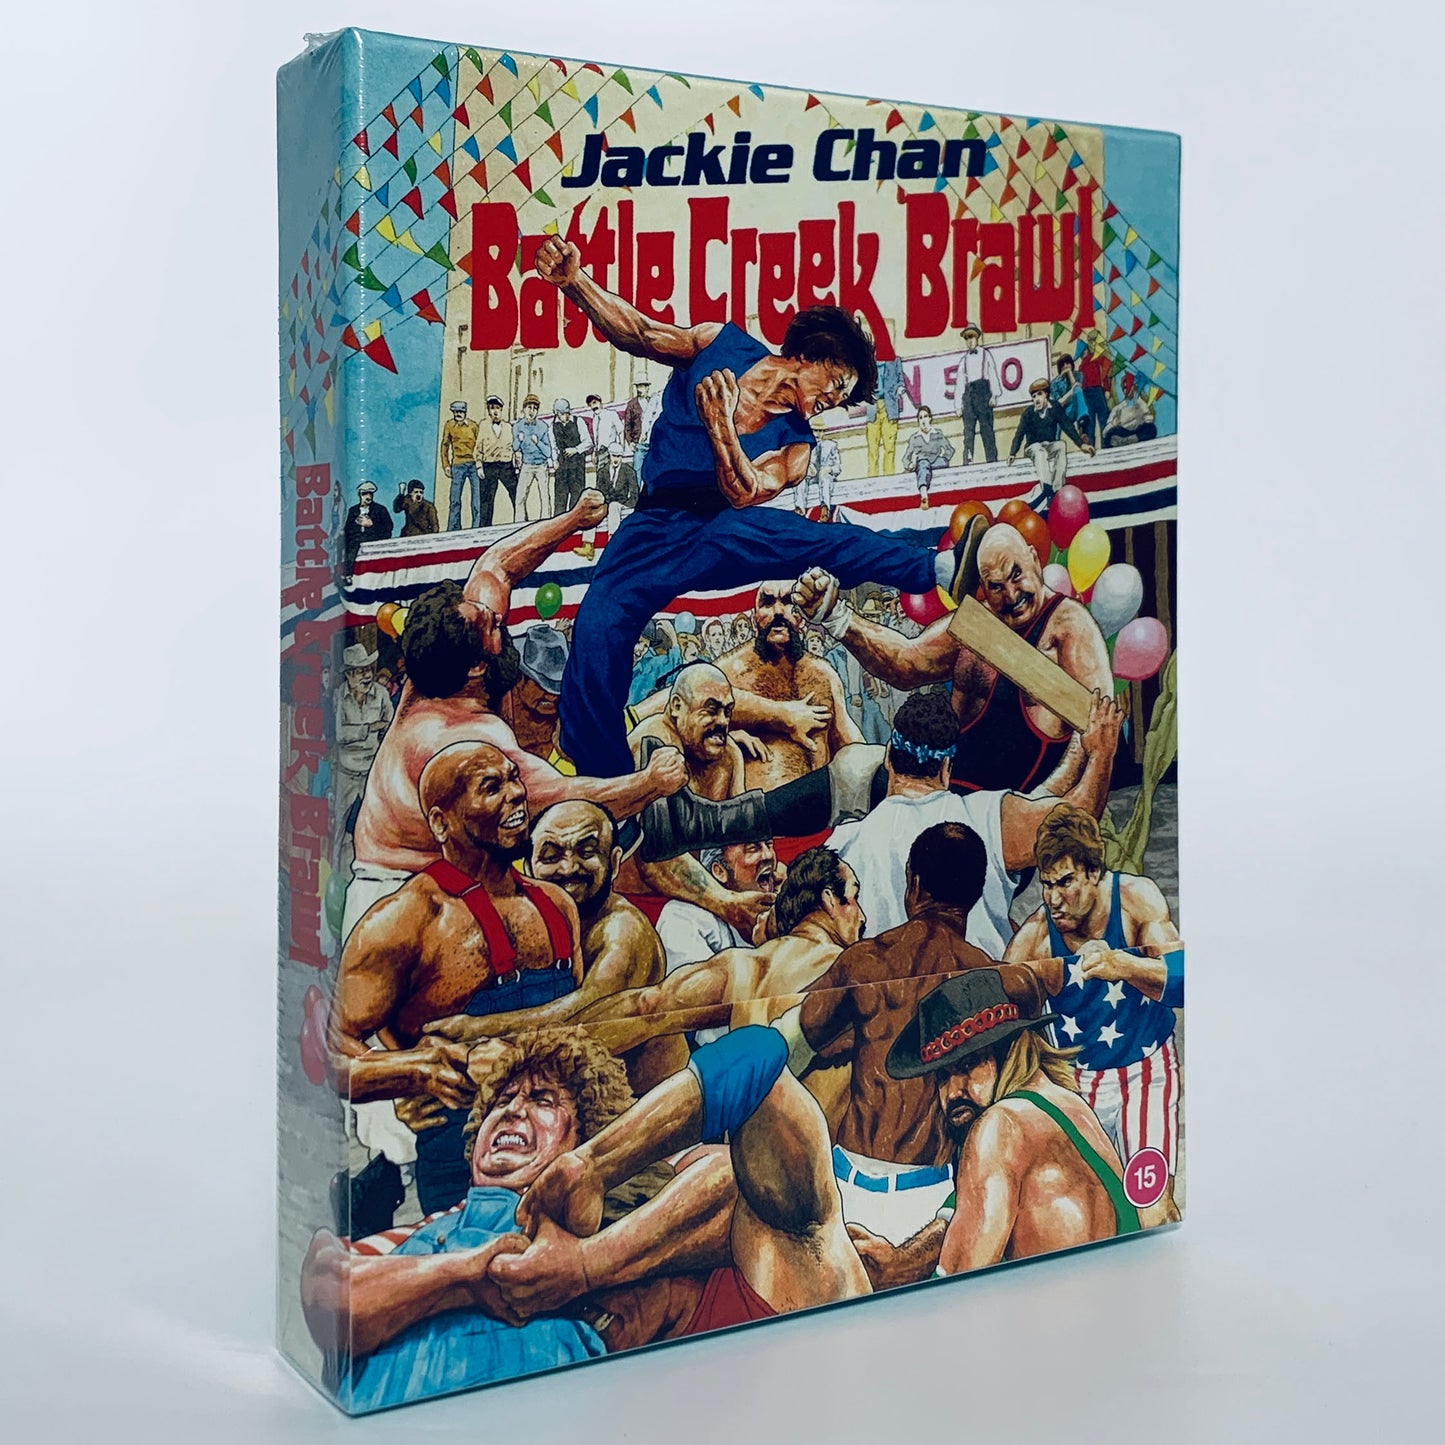 Battle Creek Brawl Big Brawl Limited Edition Jackie Chan Robert Clouse Region B Blu-ray 88 Films UK